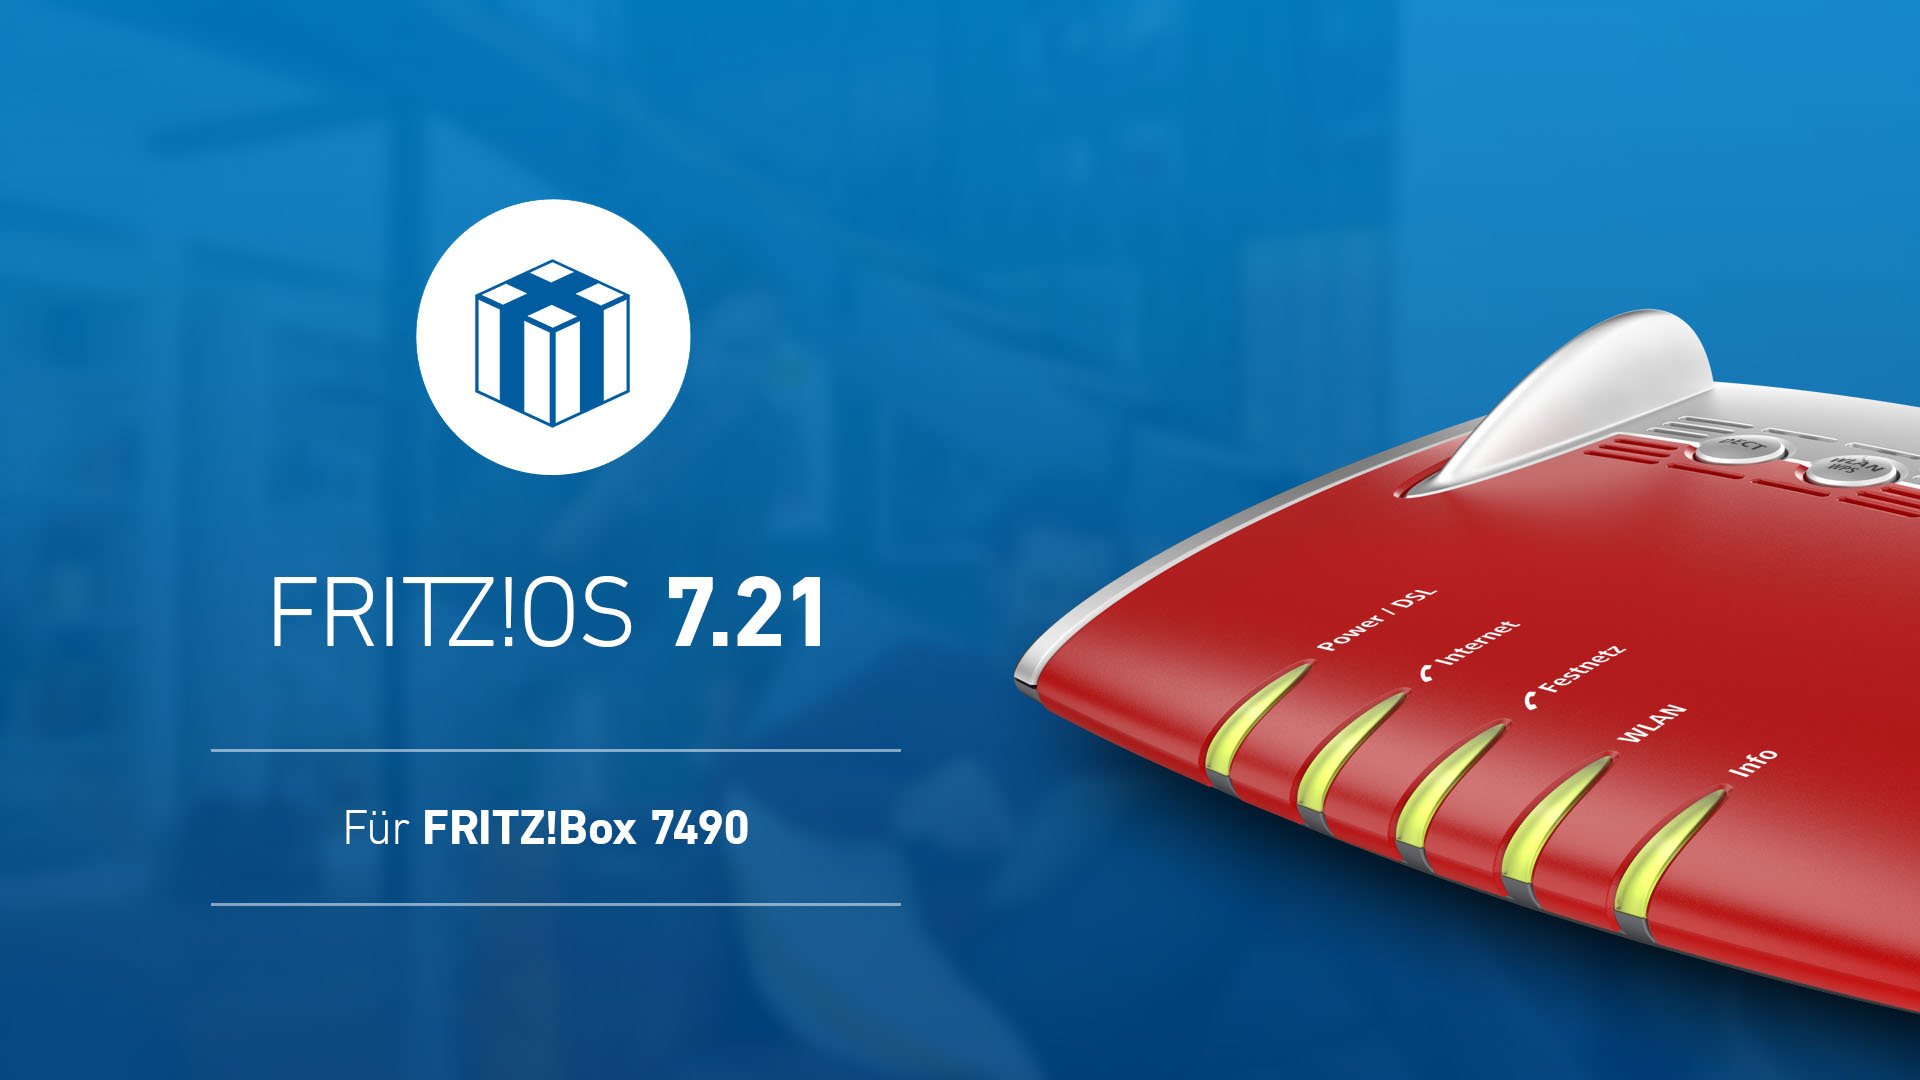 FritzBox 7490 7.21